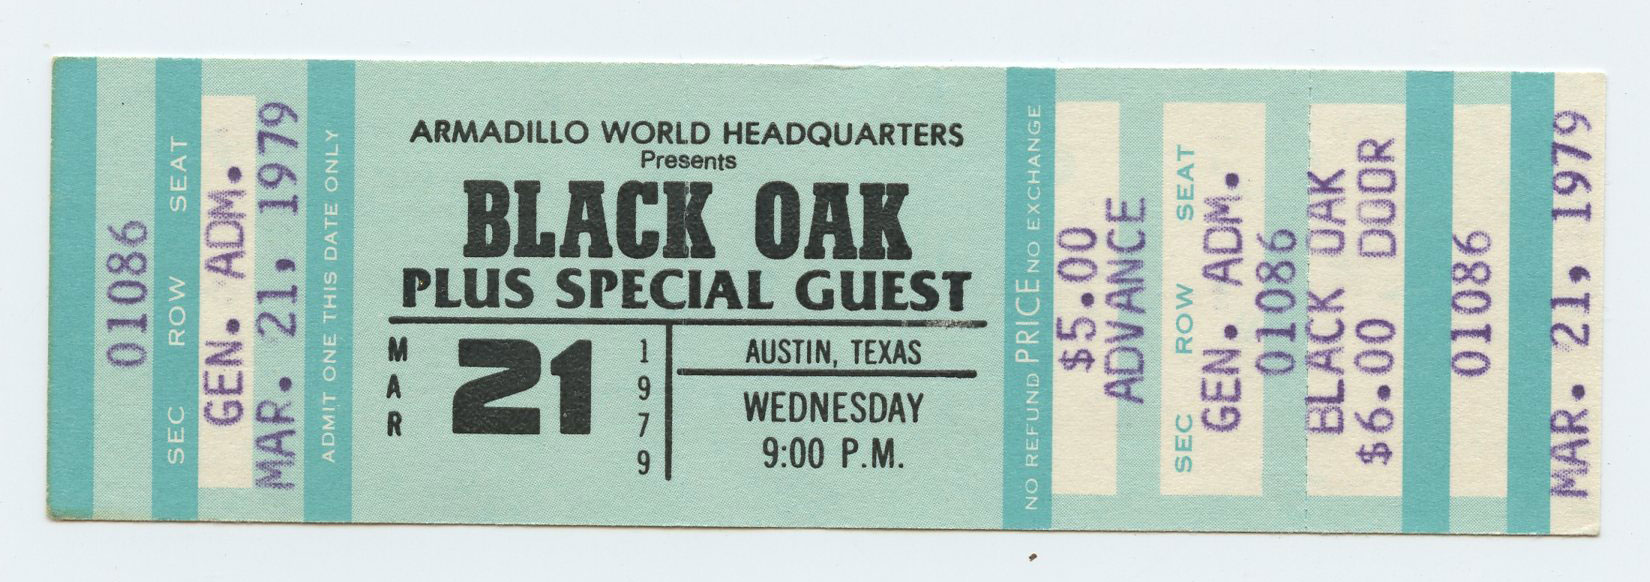 Black Oak Vintage Ticket 1979 March 21 Armadillo World Headquarters Austin TX 